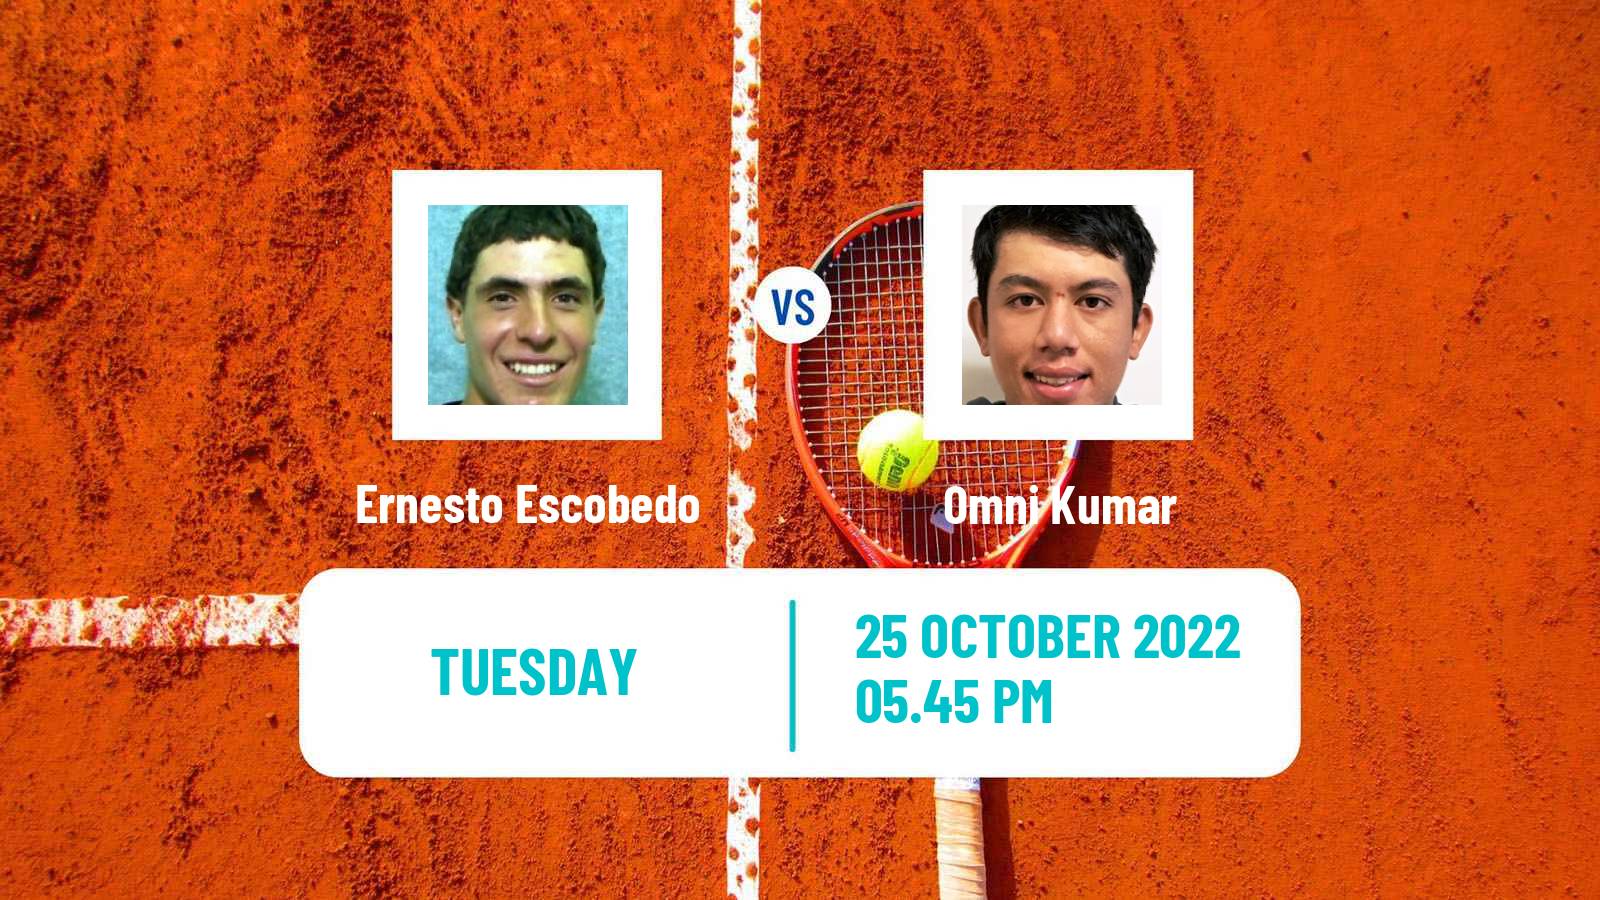 Tennis ATP Challenger Ernesto Escobedo - Omni Kumar